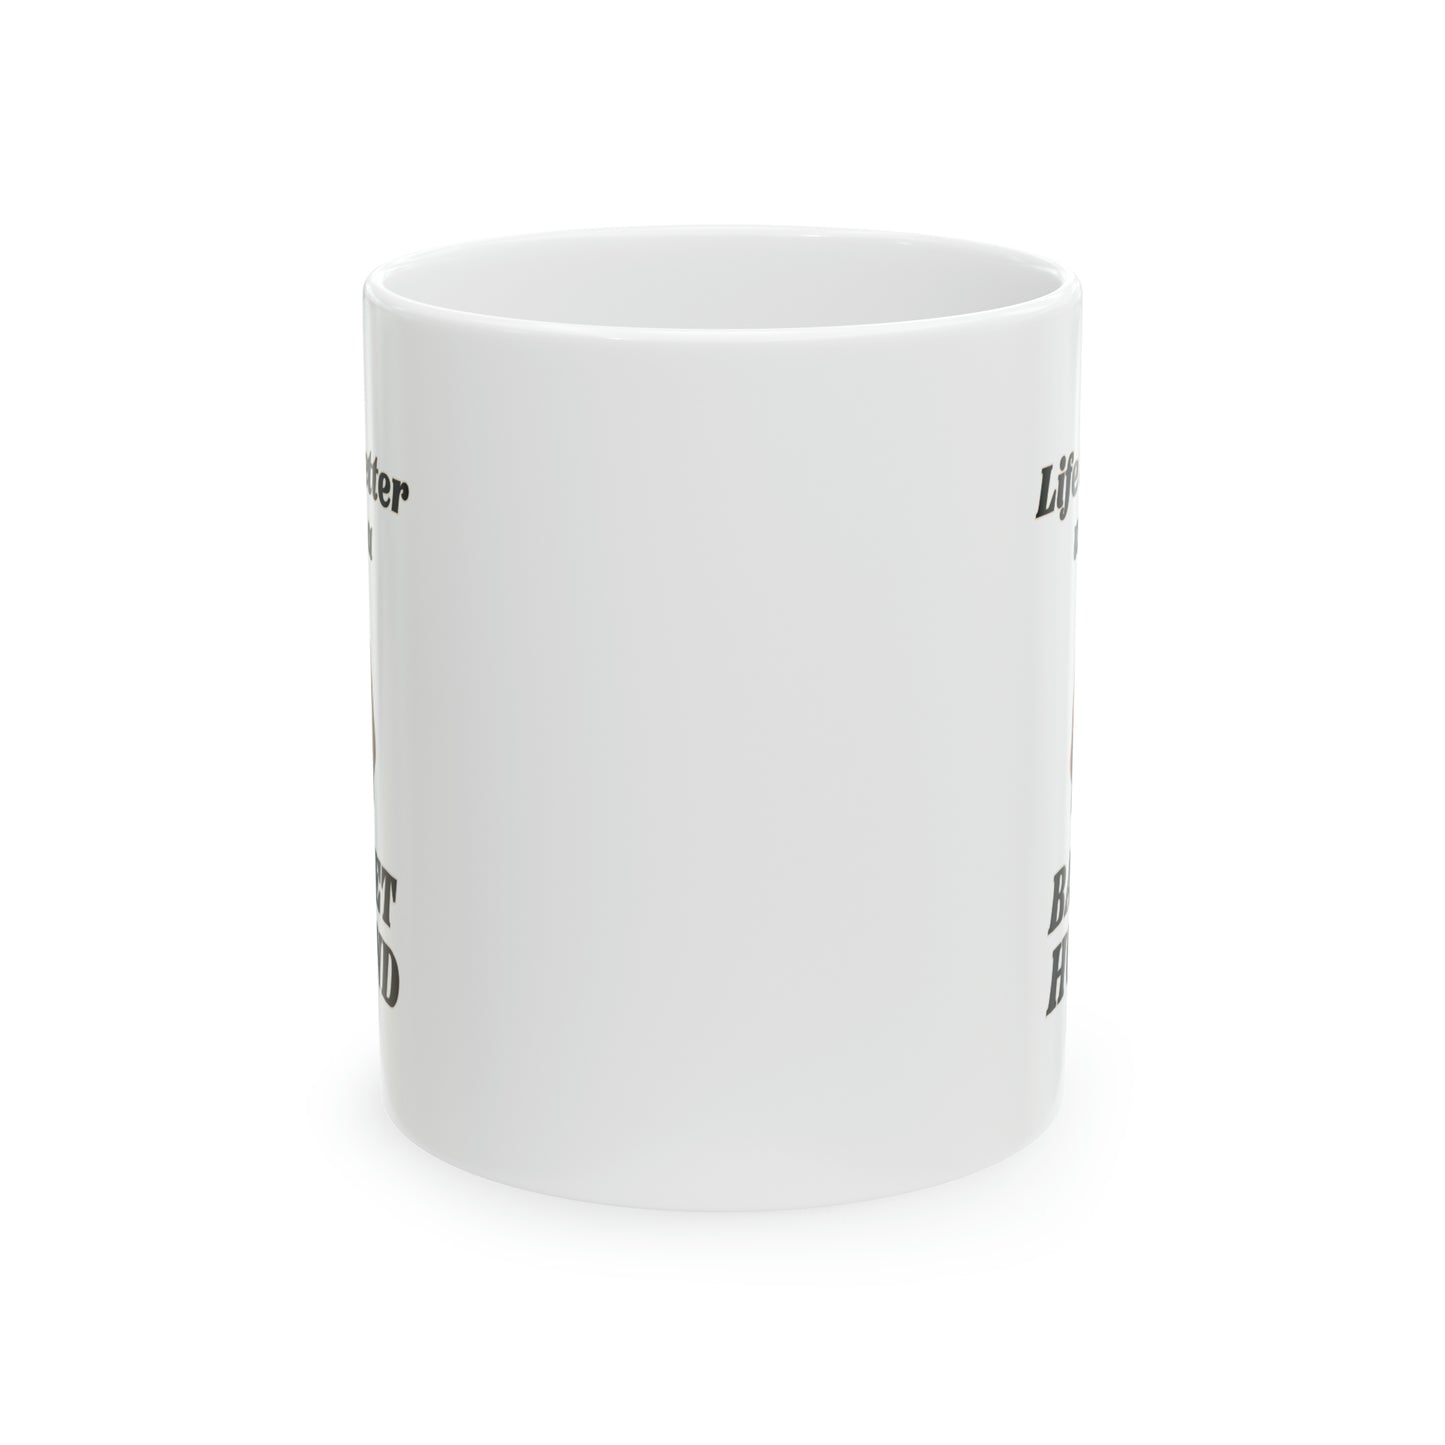 Basset Hound Lover's Ceramic Mug - 'Life is Better with a Basset Hound' - 11 oz Dog-Themed Coffee & Tea Mug